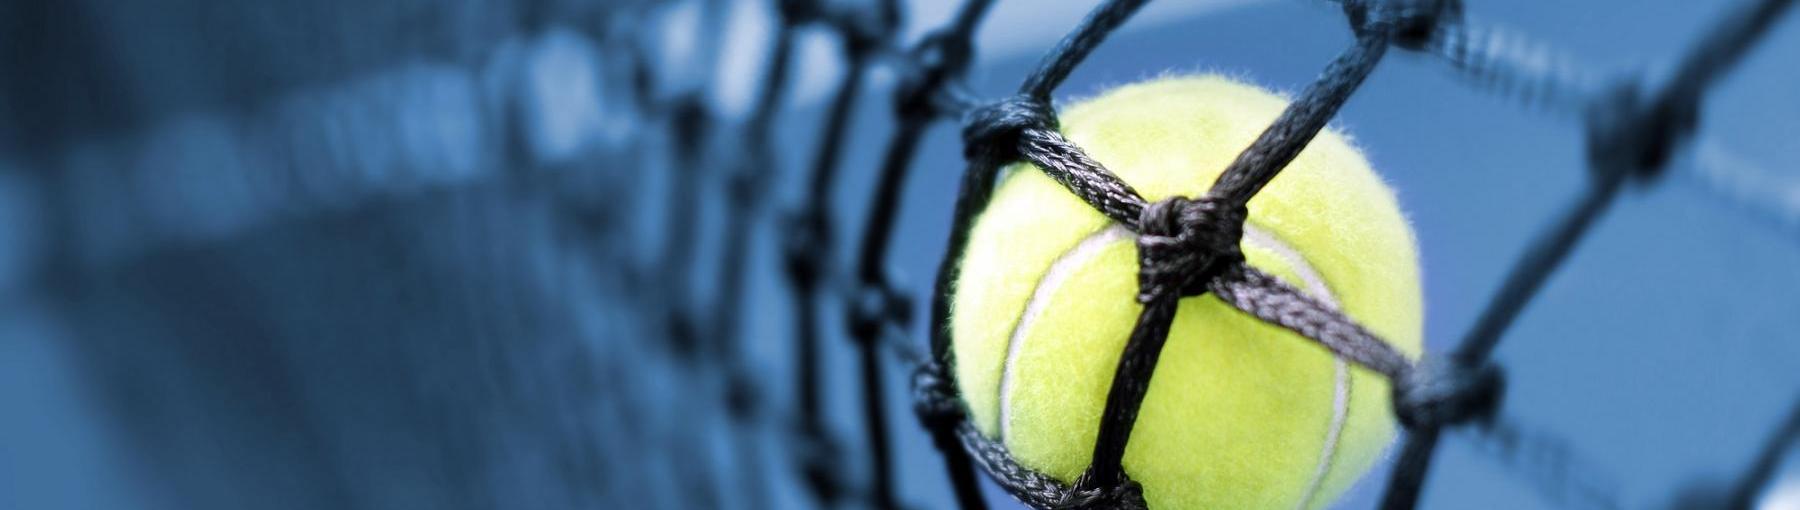 W Bytomiu powstanie hala tenisowa. Fot. Shutterstock